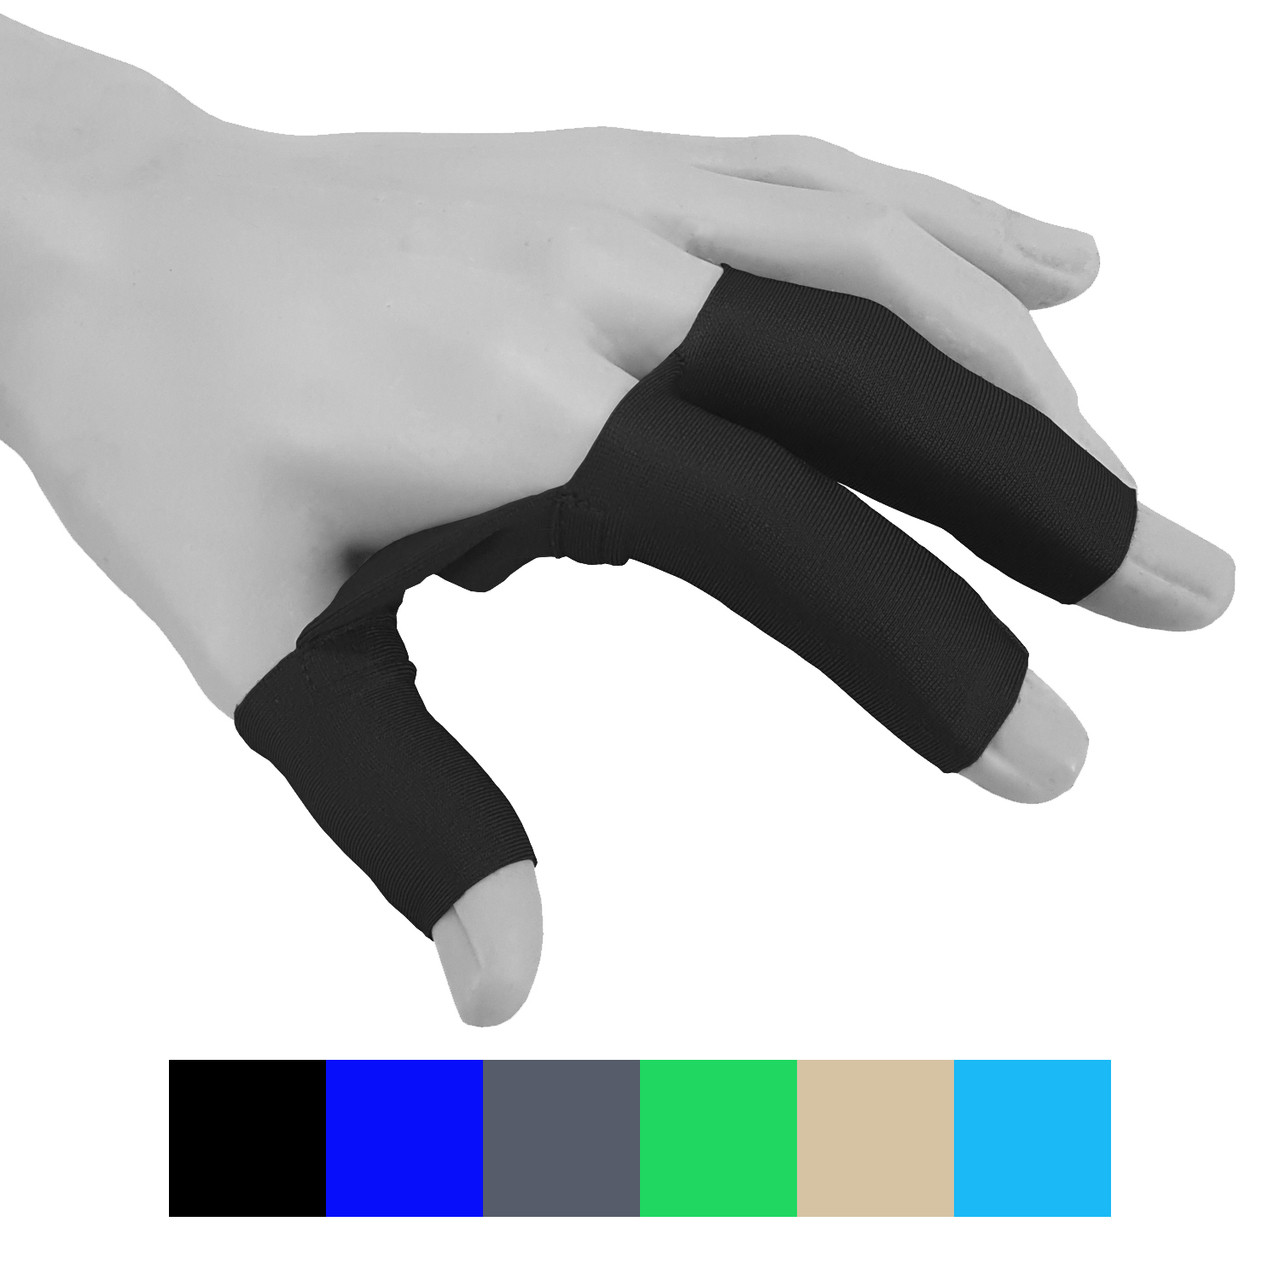 one finger glove